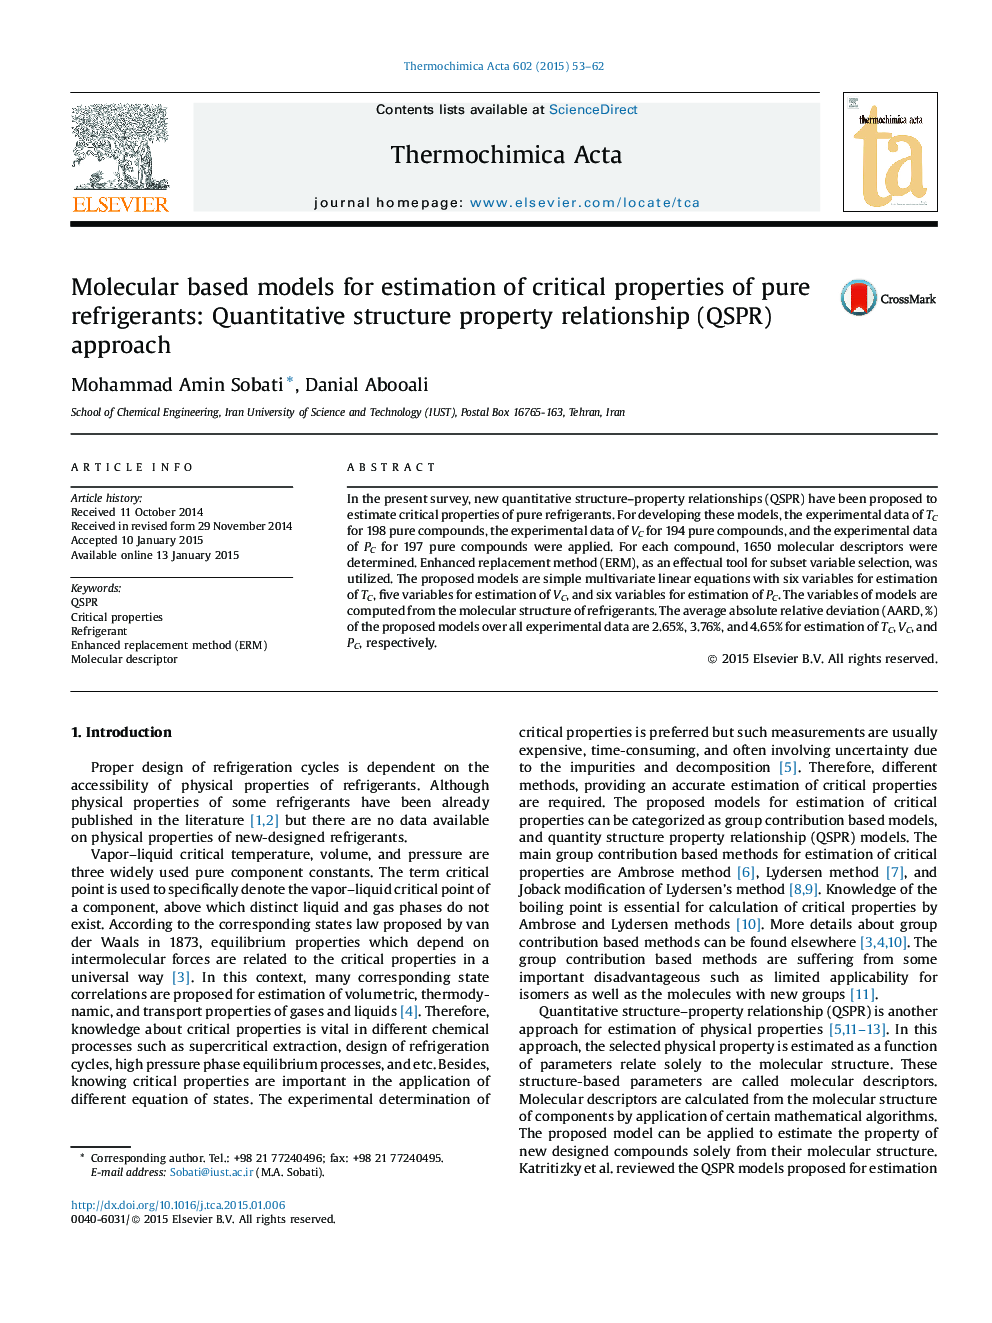 Molecular based models for estimation of critical properties of pure refrigerants: Quantitative structure property relationship (QSPR) approach